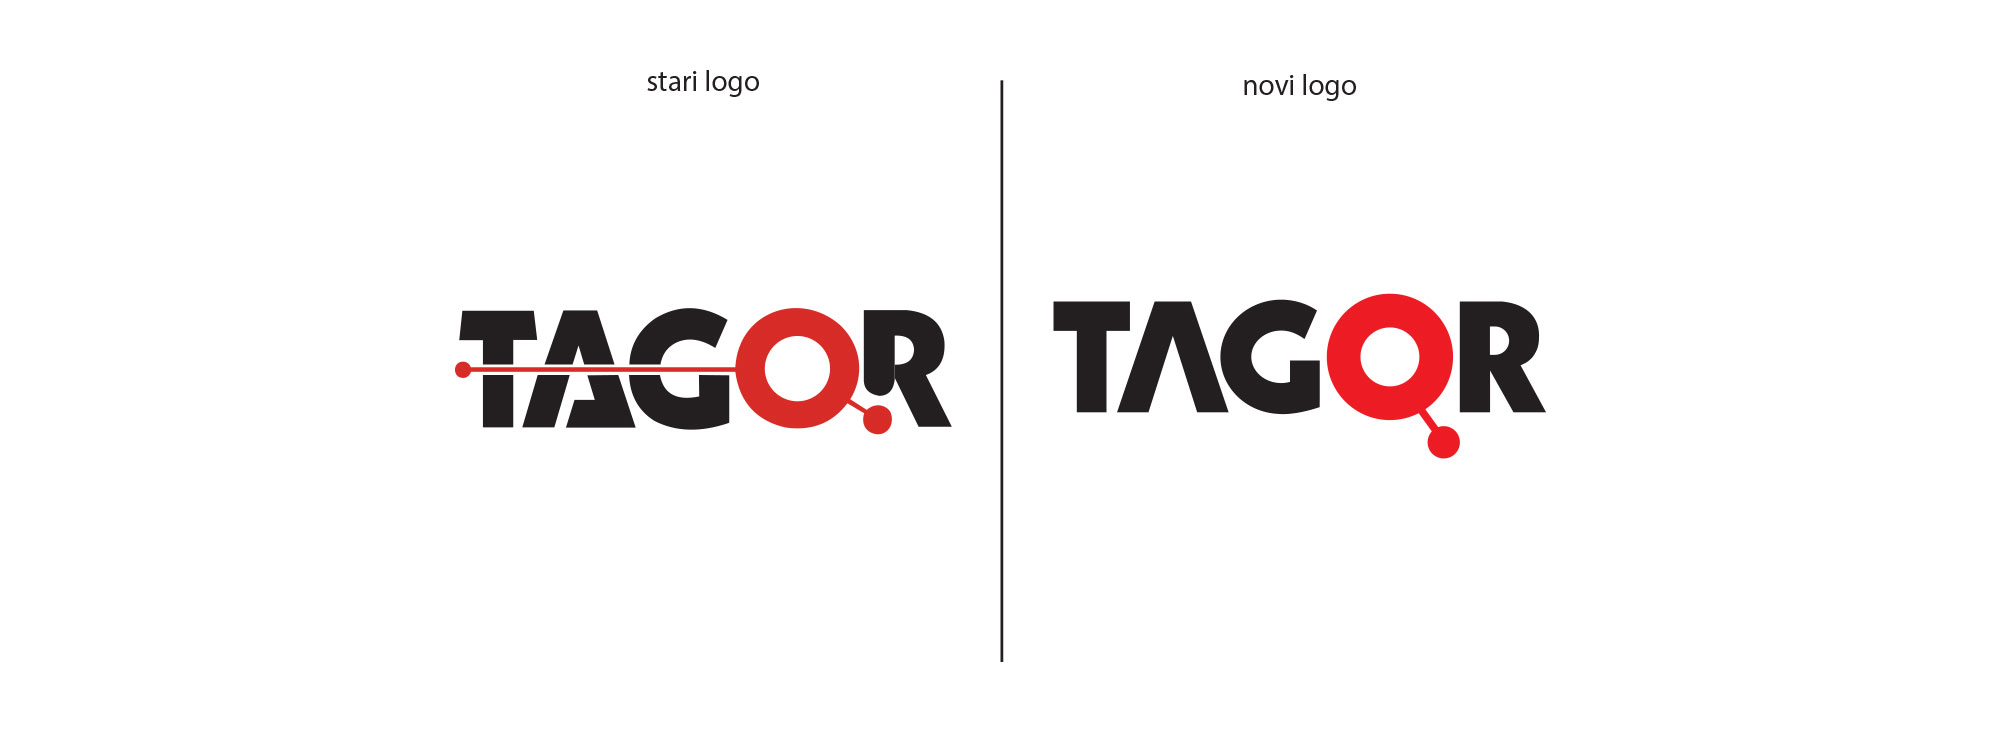 tagor logo redesign